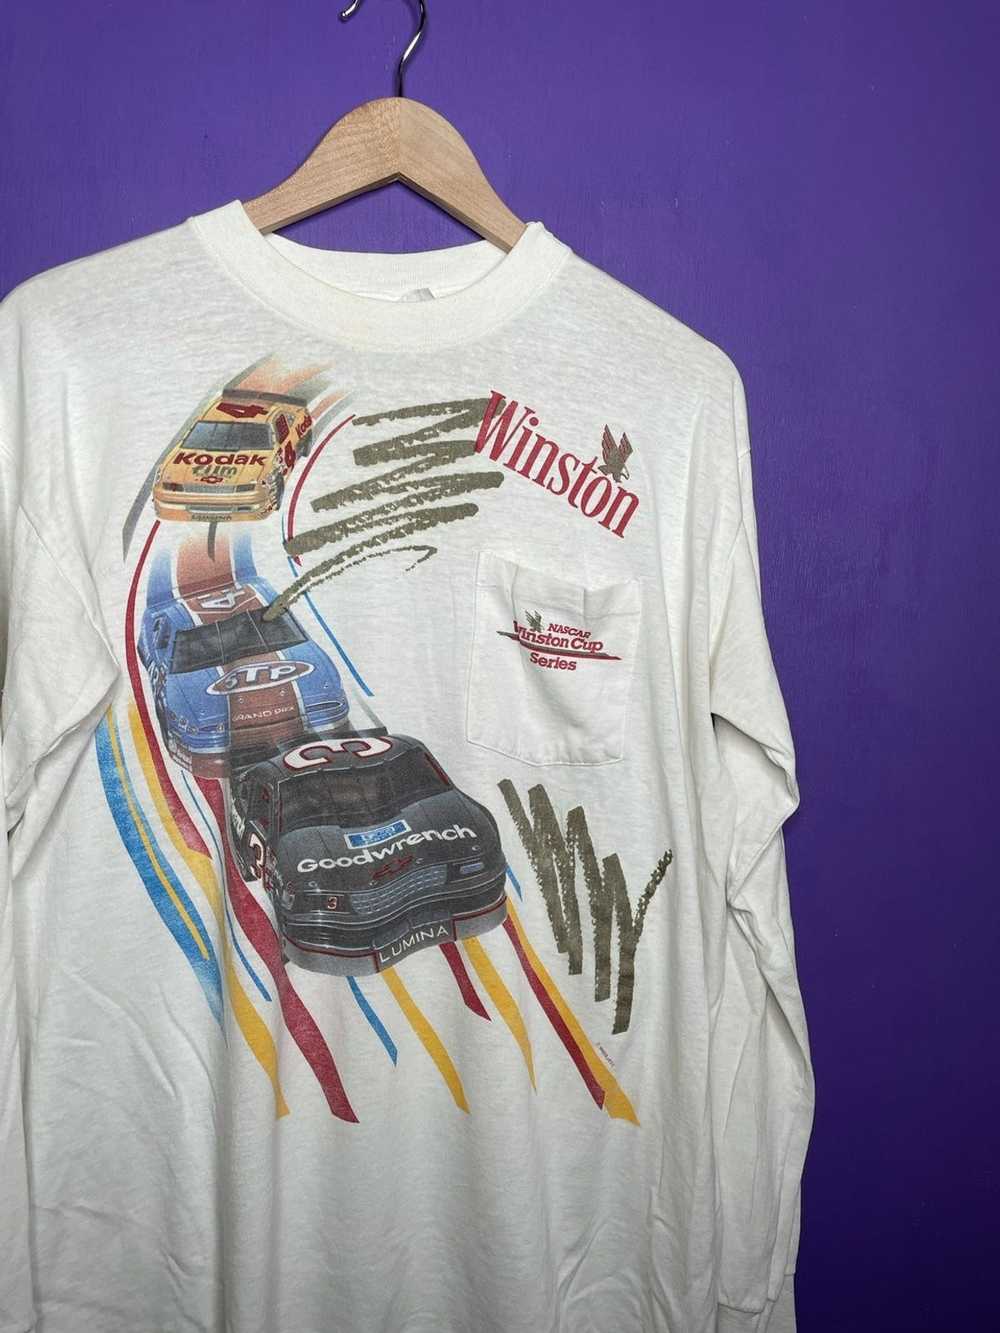 Vintage Vintage Winston racing longsleeve t-shirt - image 3